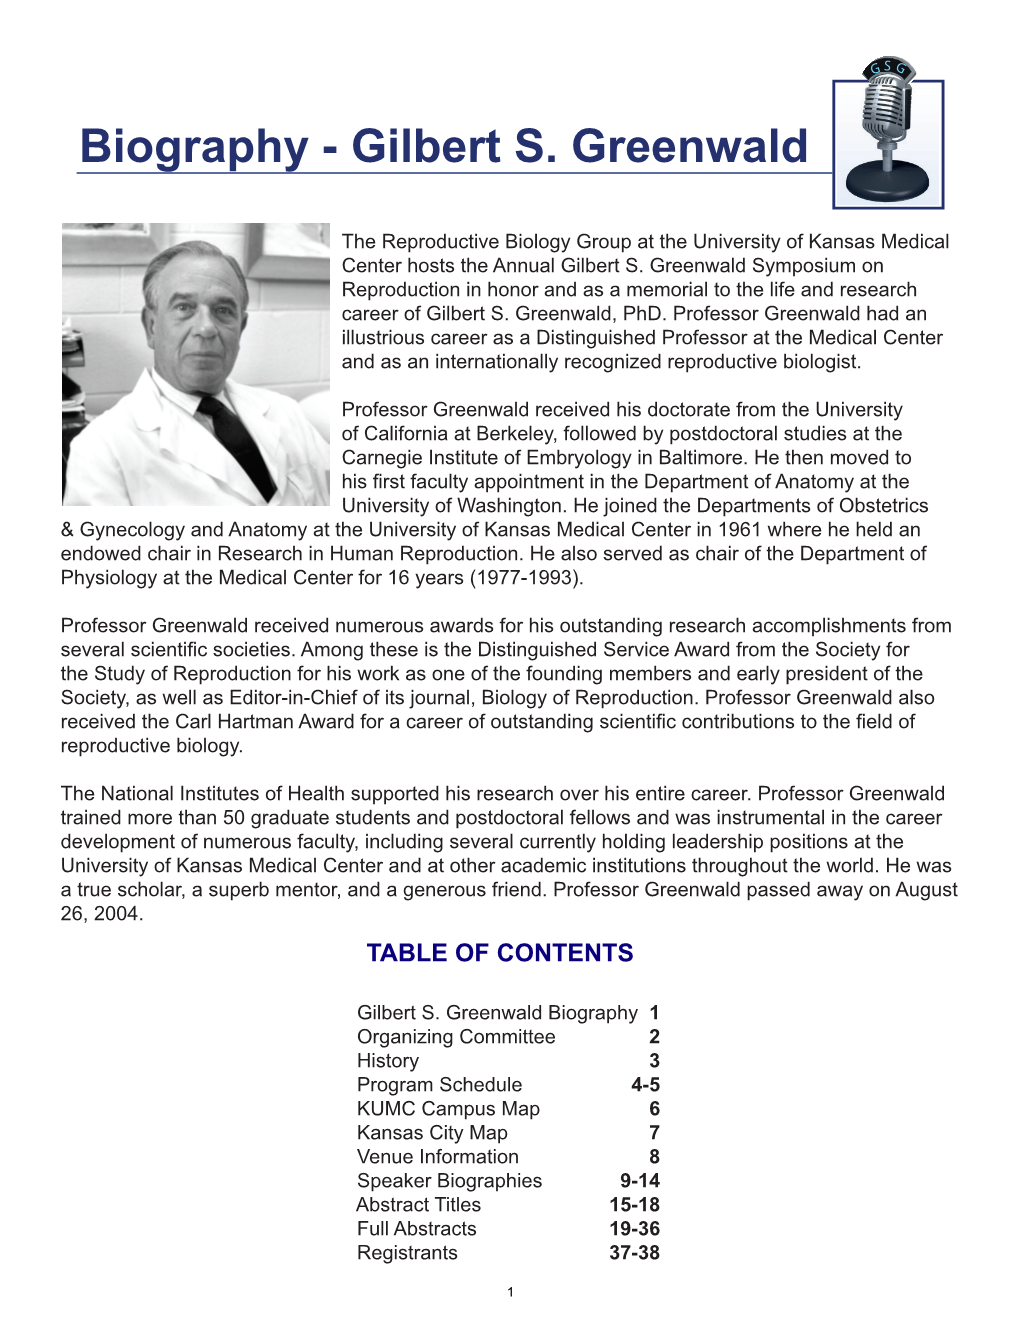 Biography - Gilbert S